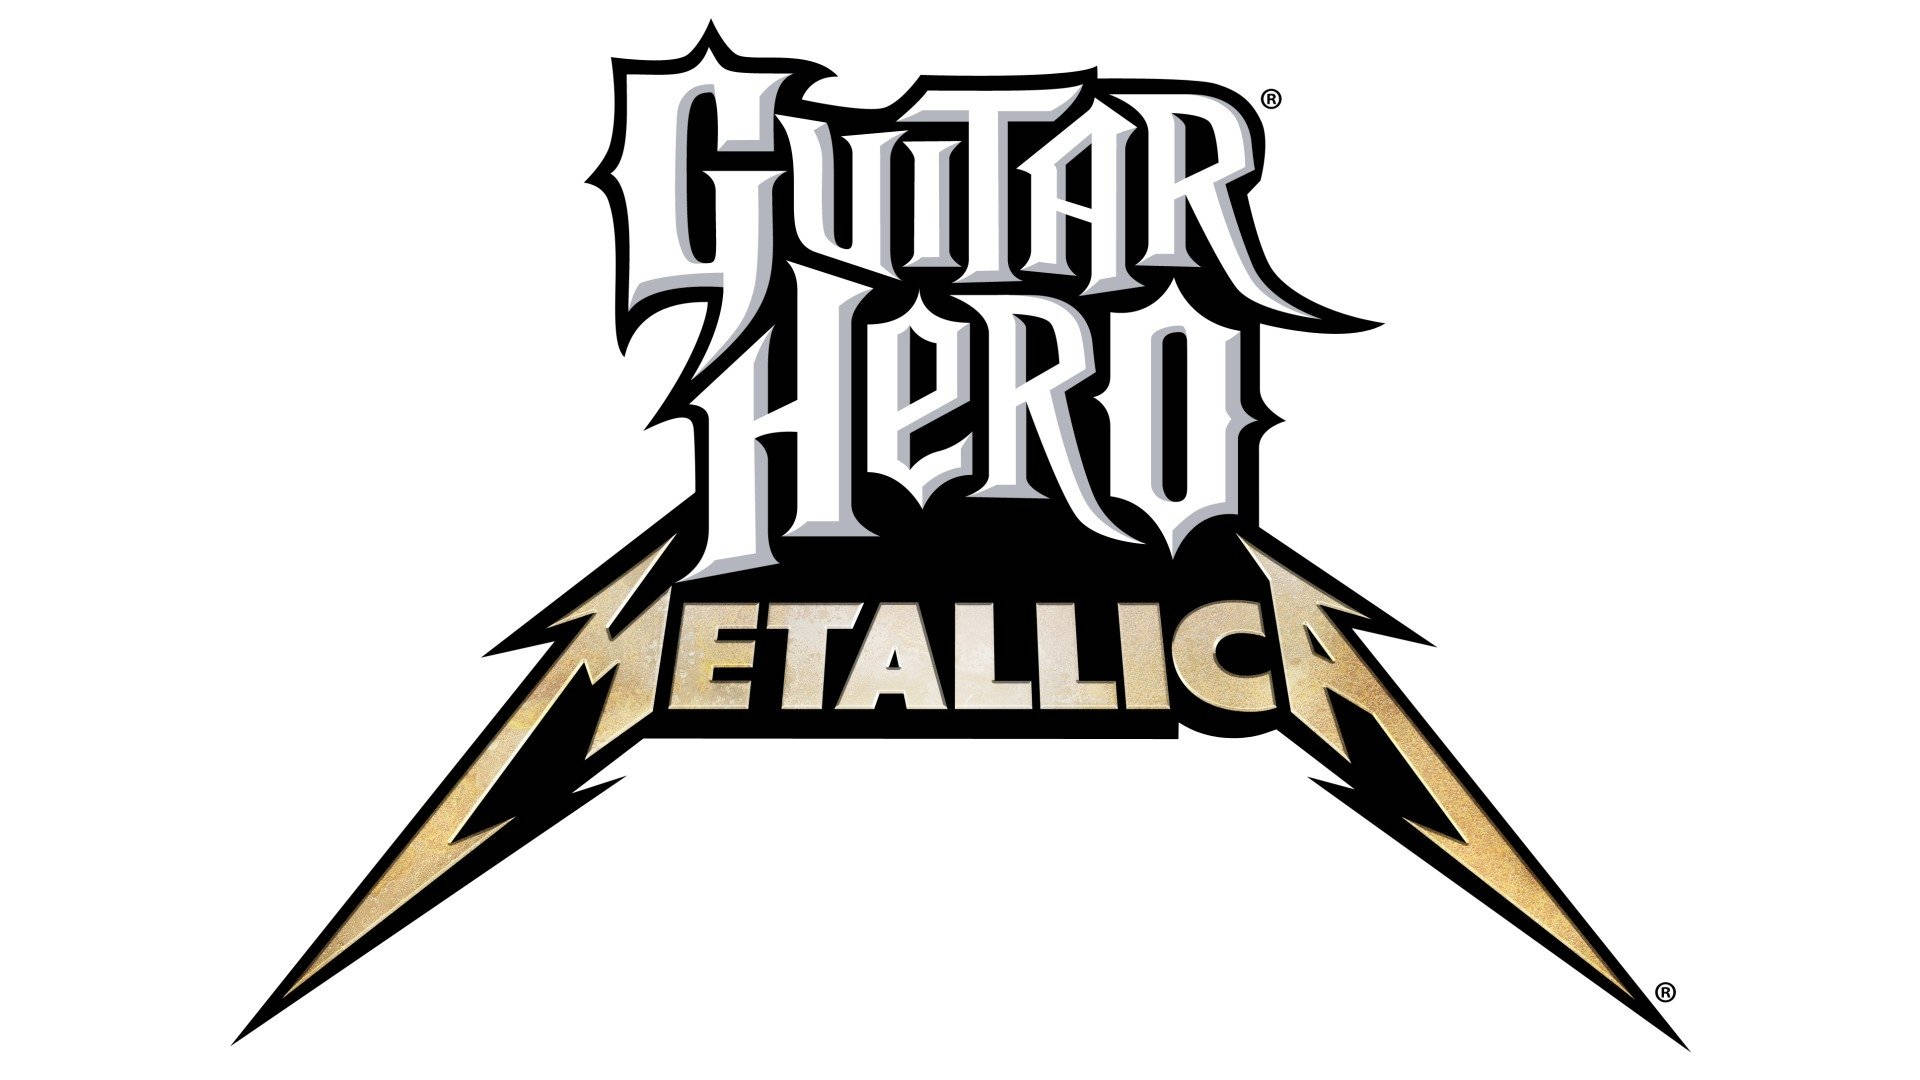 Guitar Hero Metallica In White Wallpaper